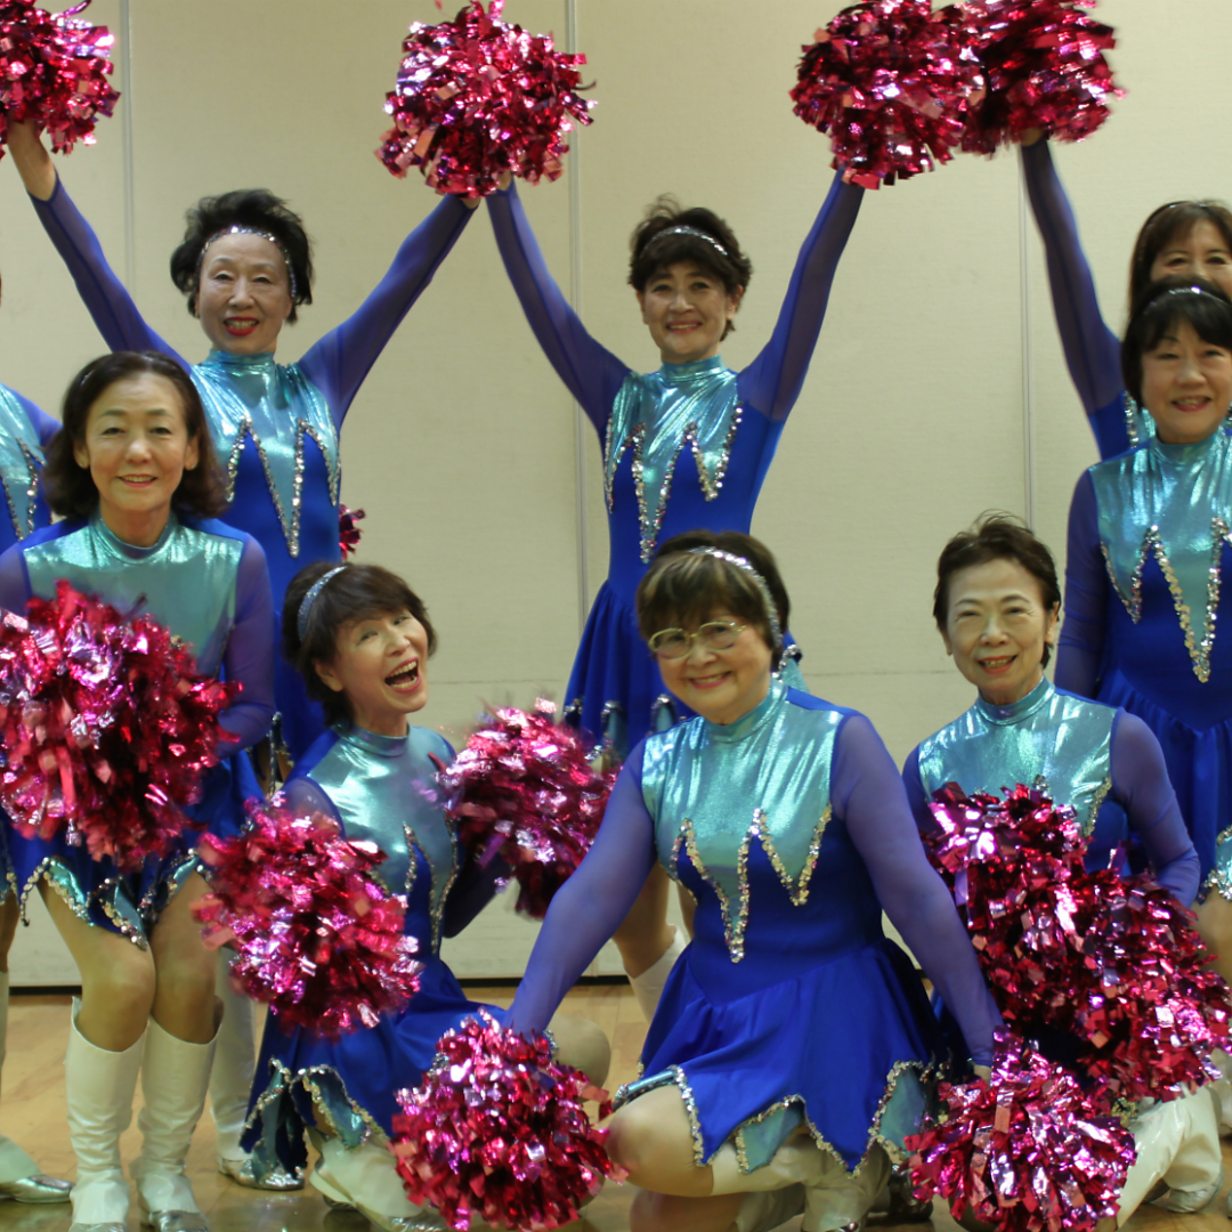 Pompon - Cheerleaders 